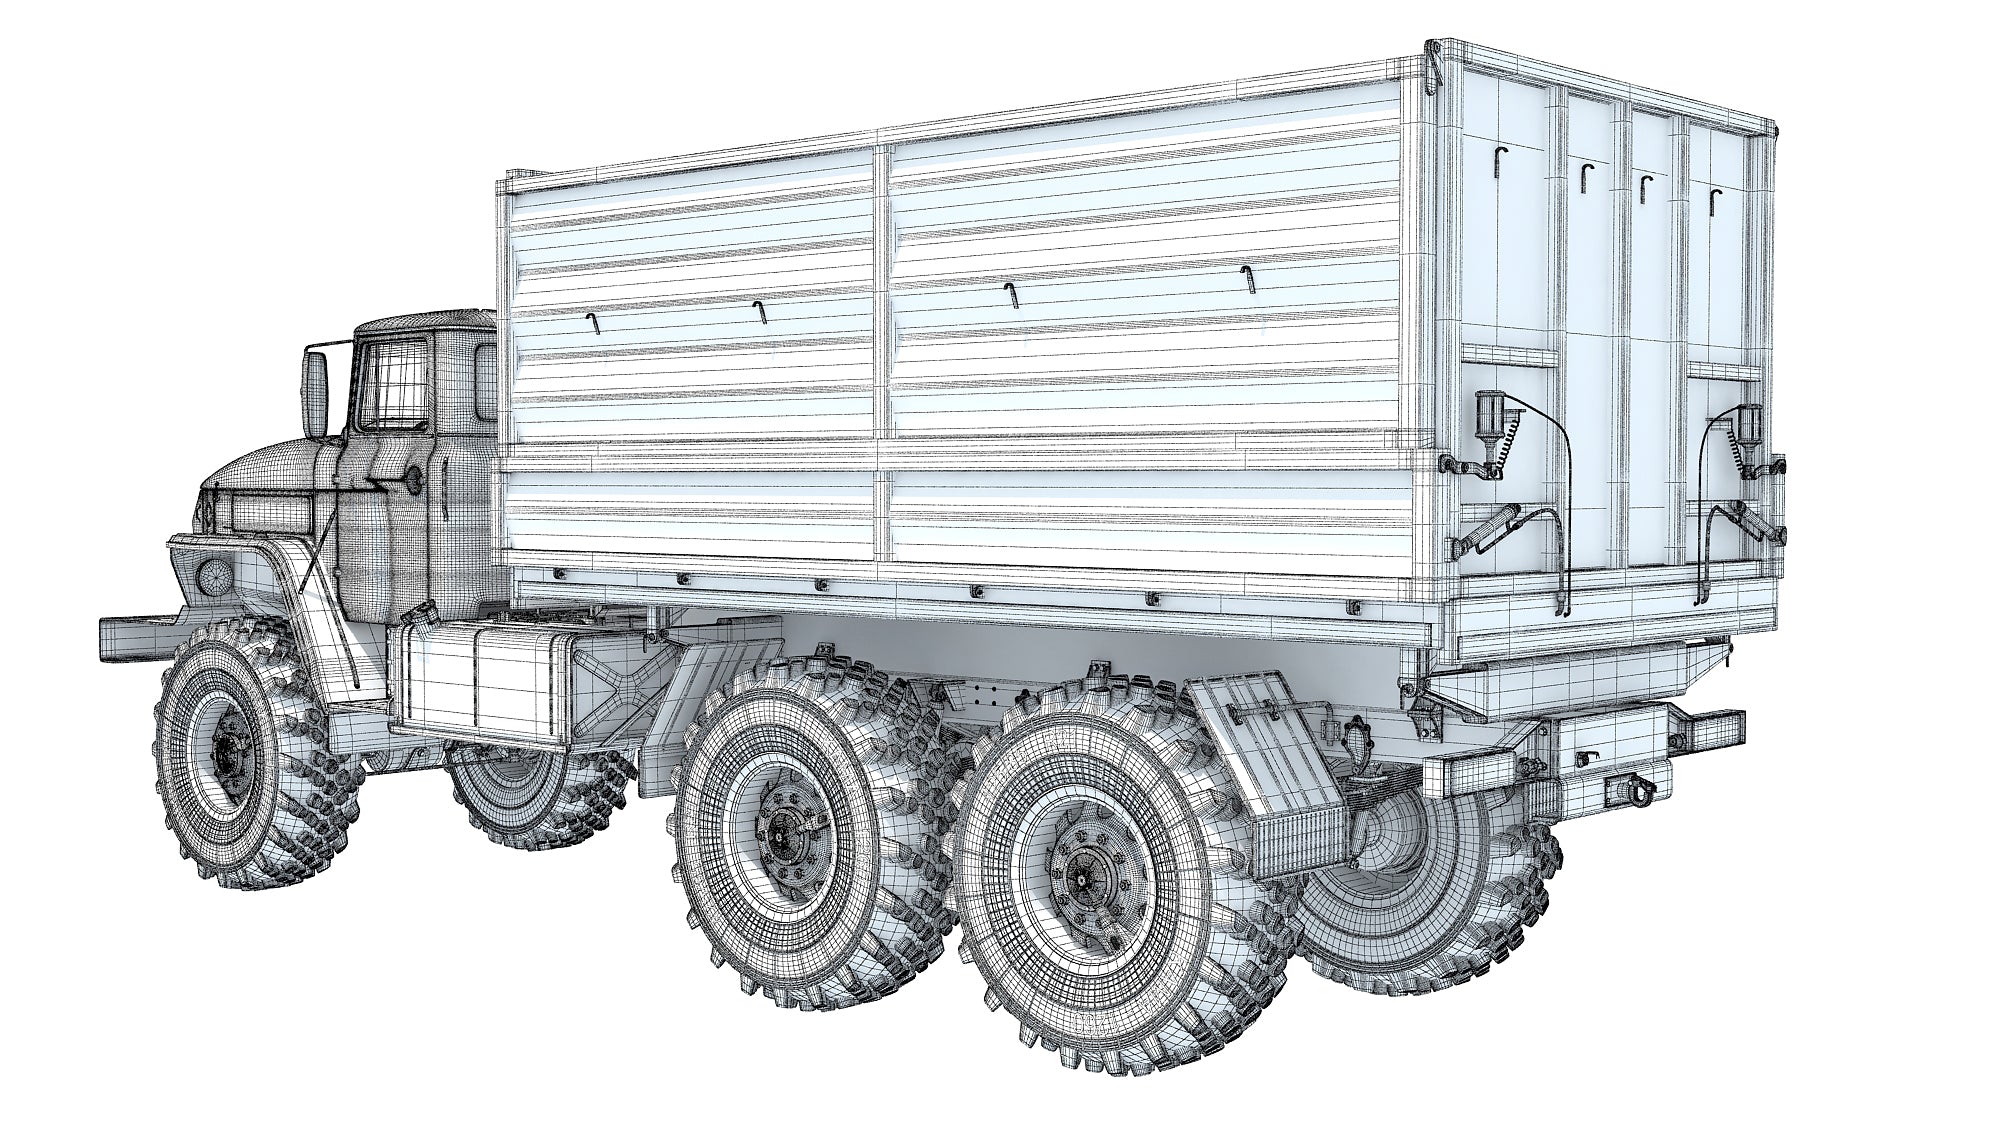 URAL Civilian Truck Off Road 6x6 Vehicle